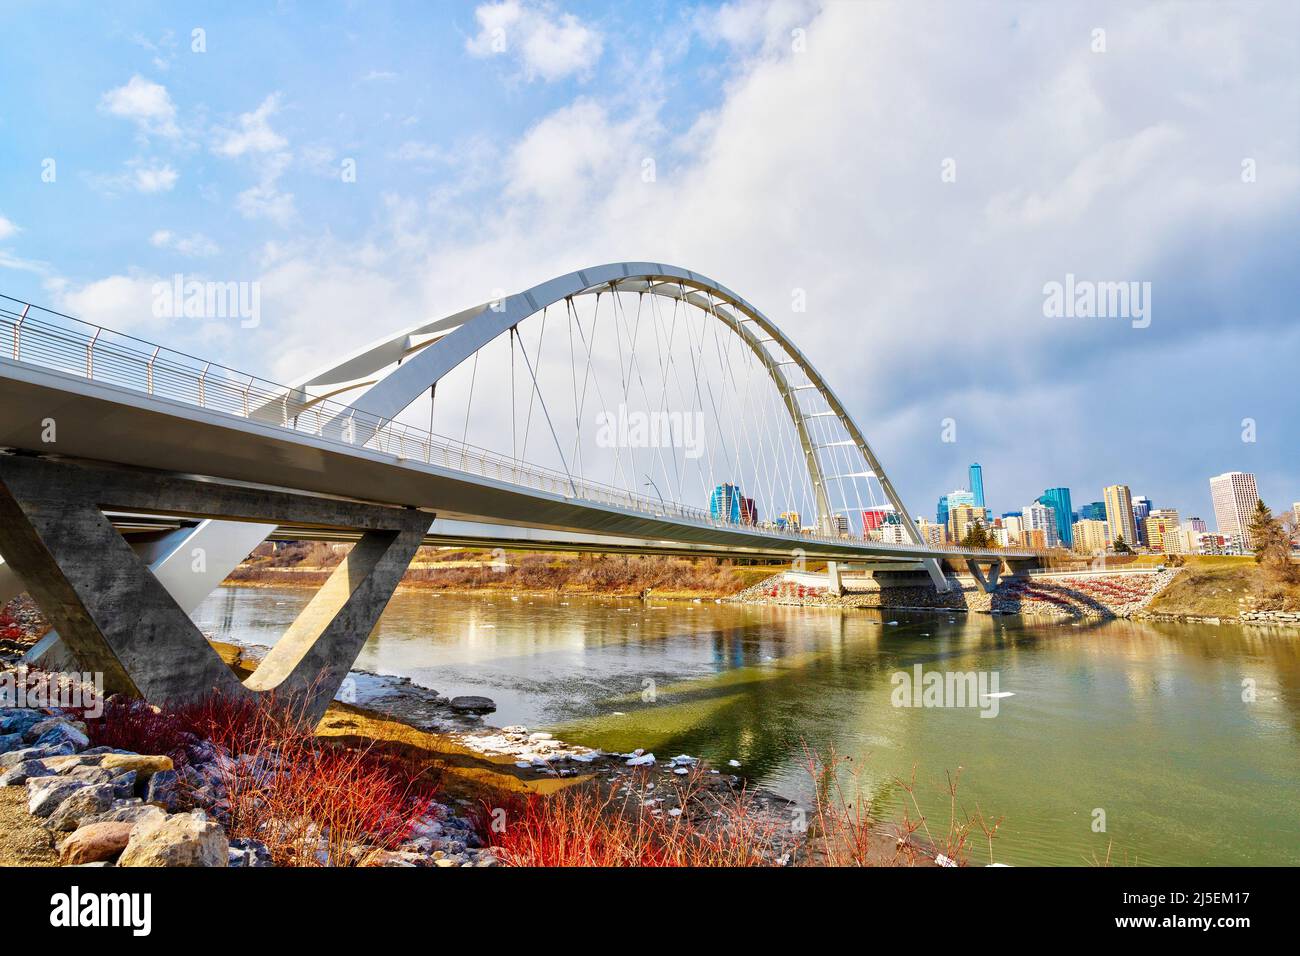 Iconic Walterdale Bridge across the Saskatchewan River leading to downtown Edmonton, Alberta, Canada. Stock Photo